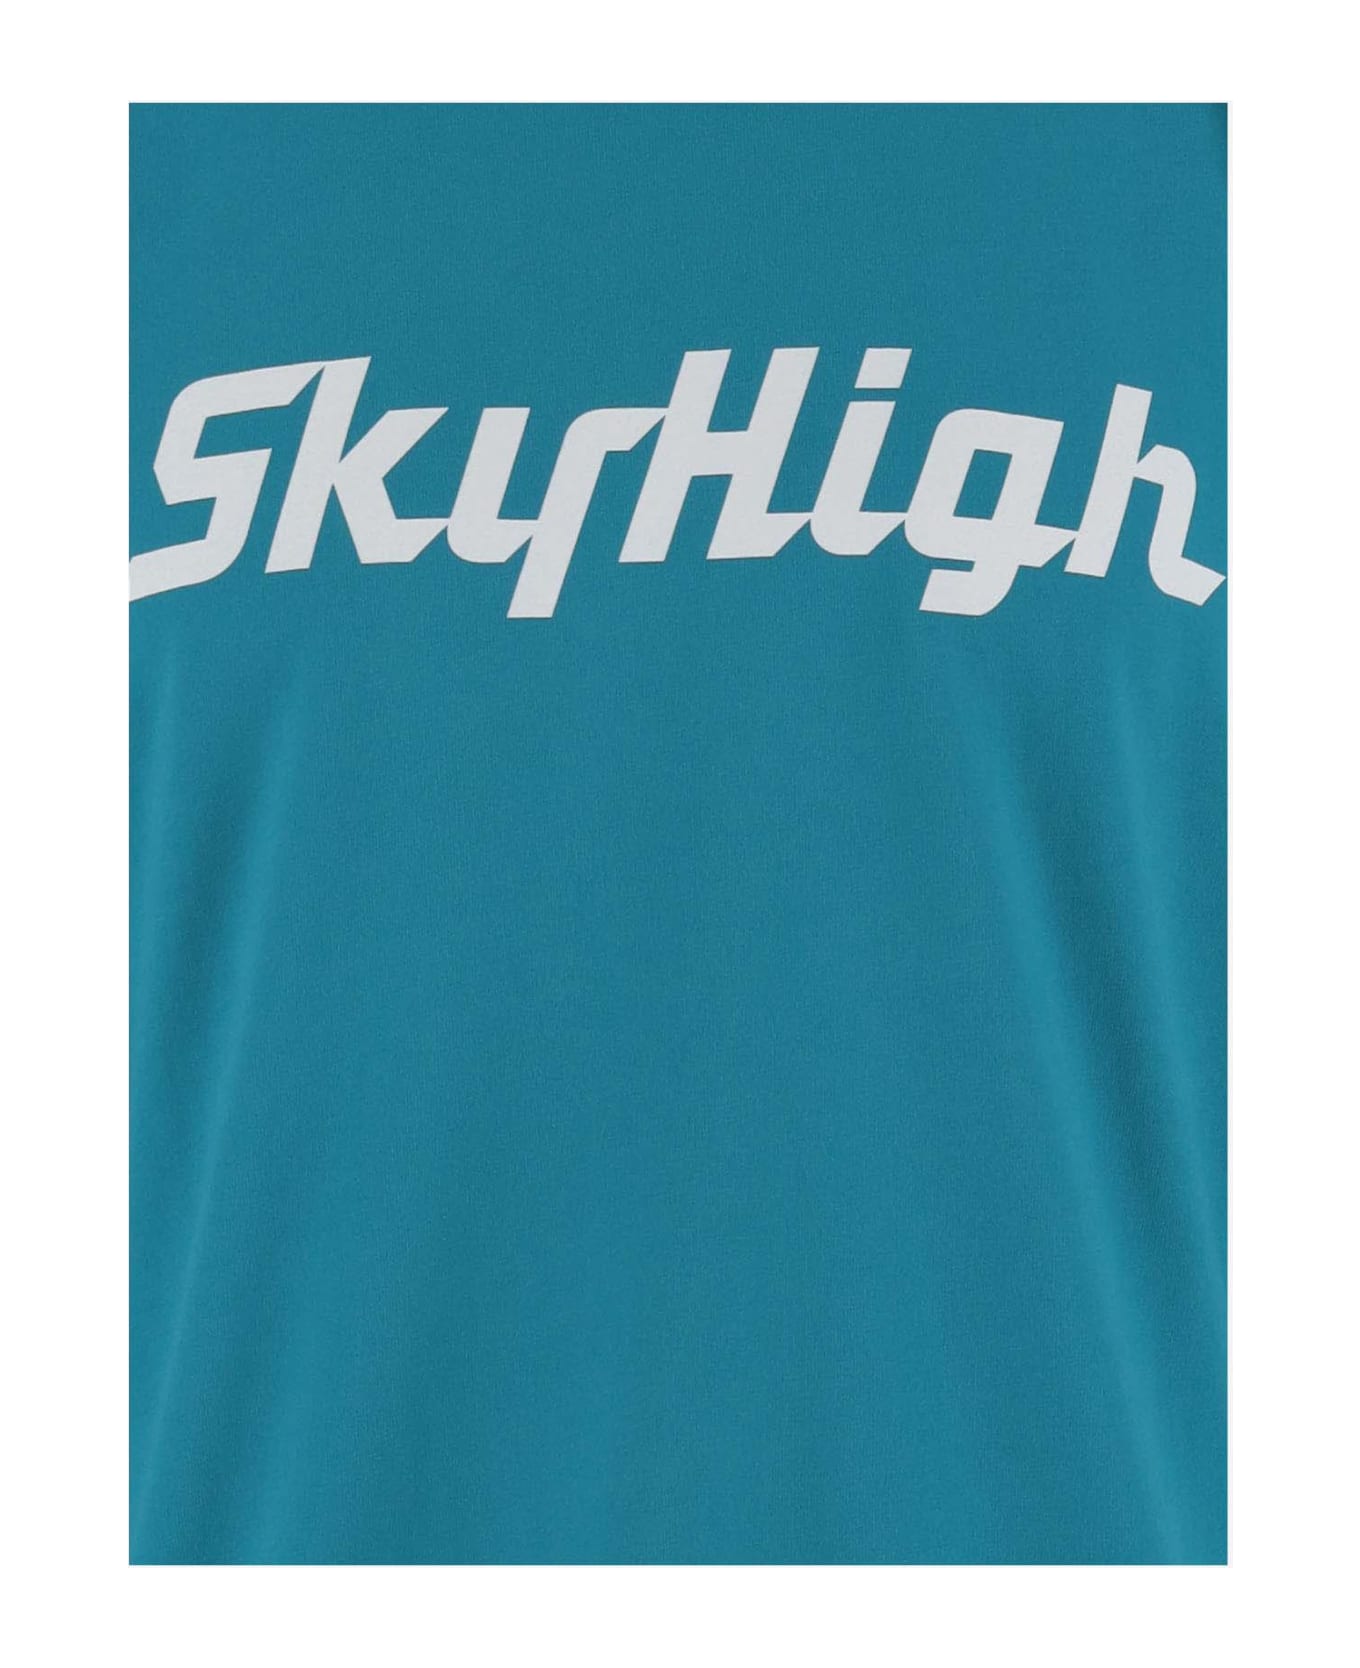 Sky High Farm Cotton T-shirt With Logo - Blue シャツ